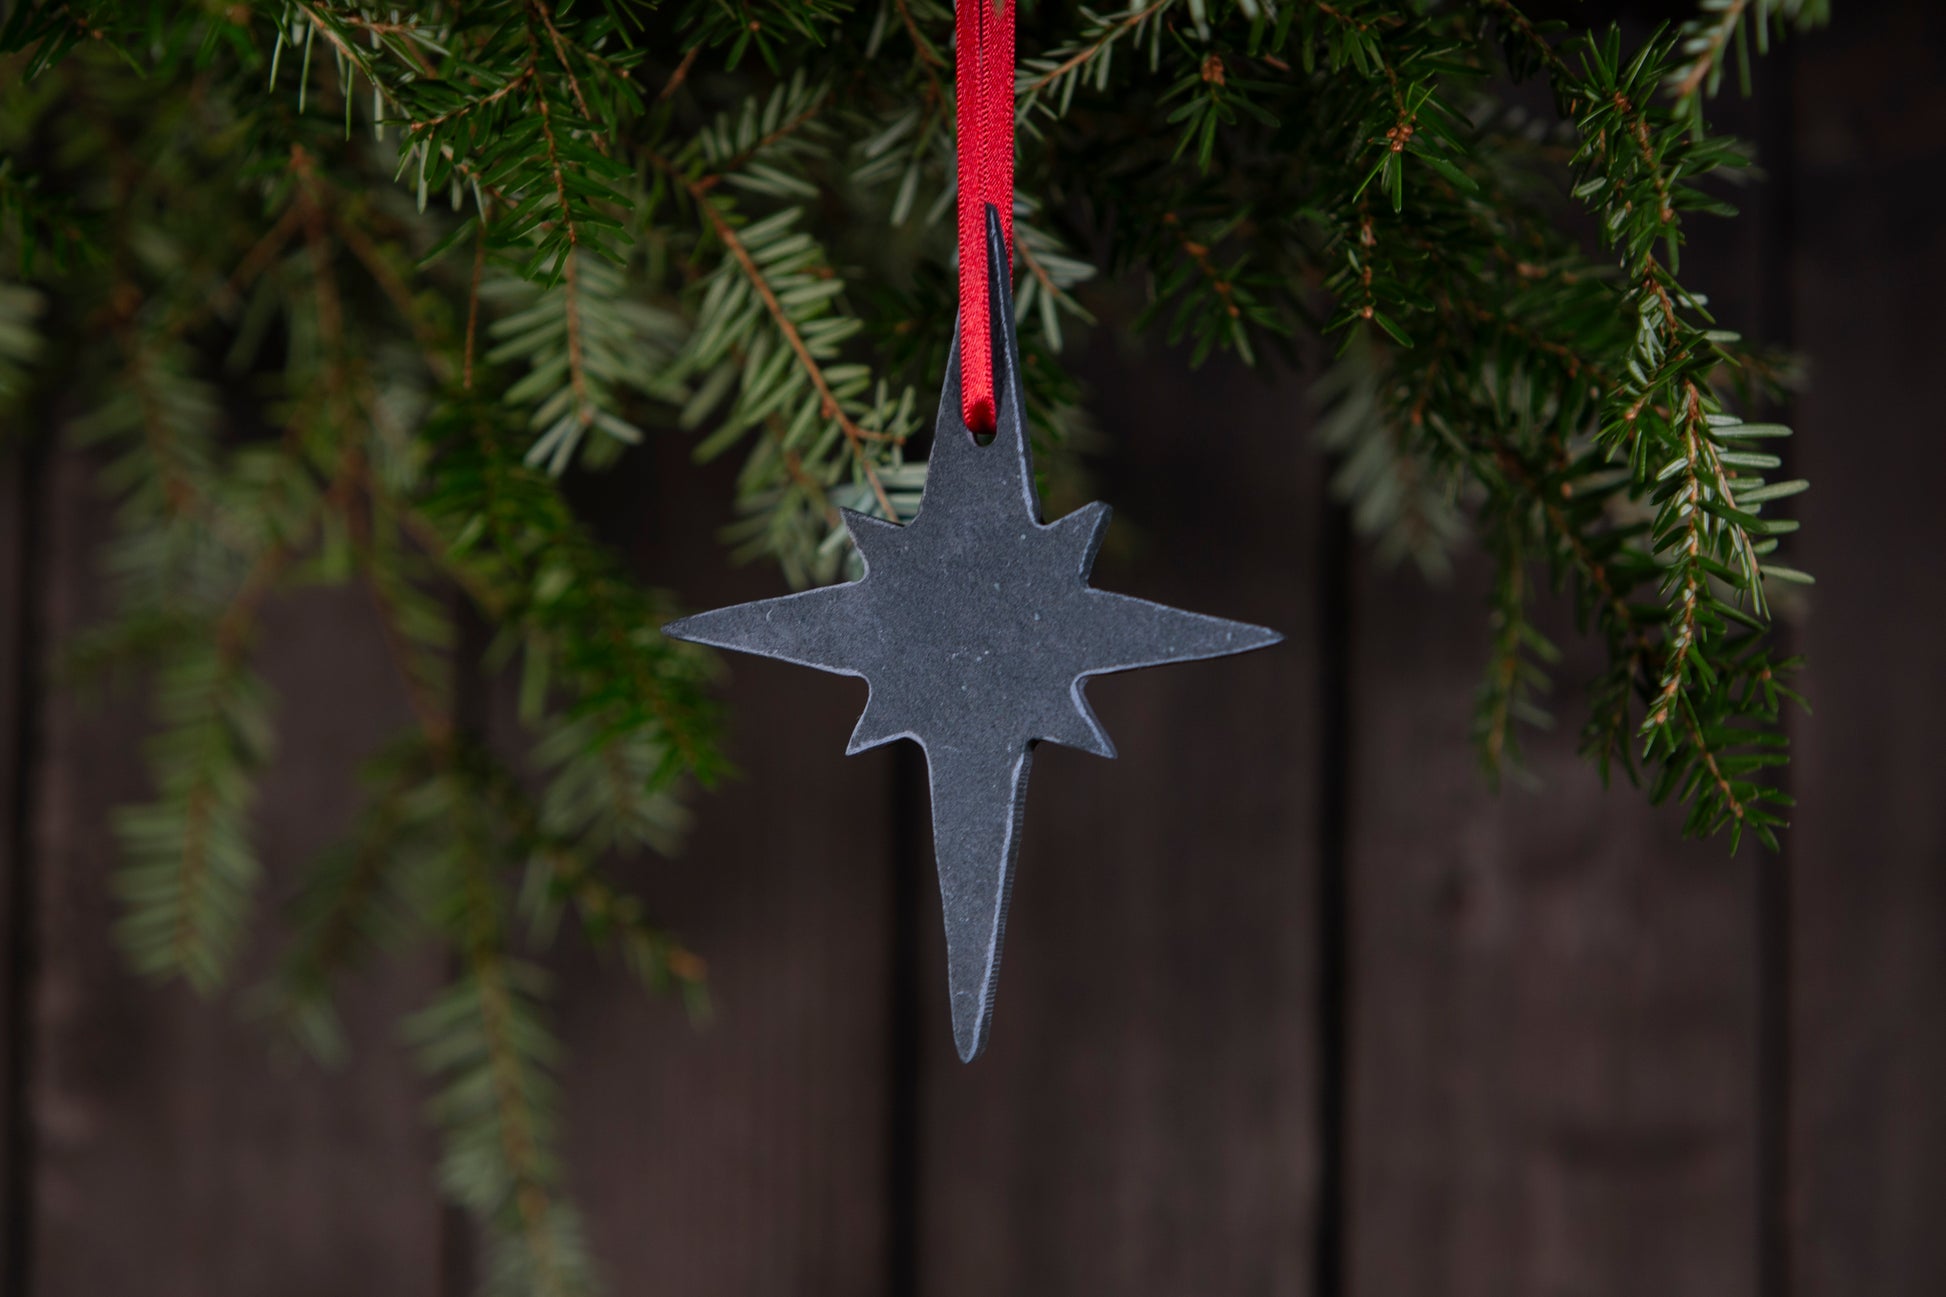 Slate Homeware Decoration for Christmas - Slate Christmas Star